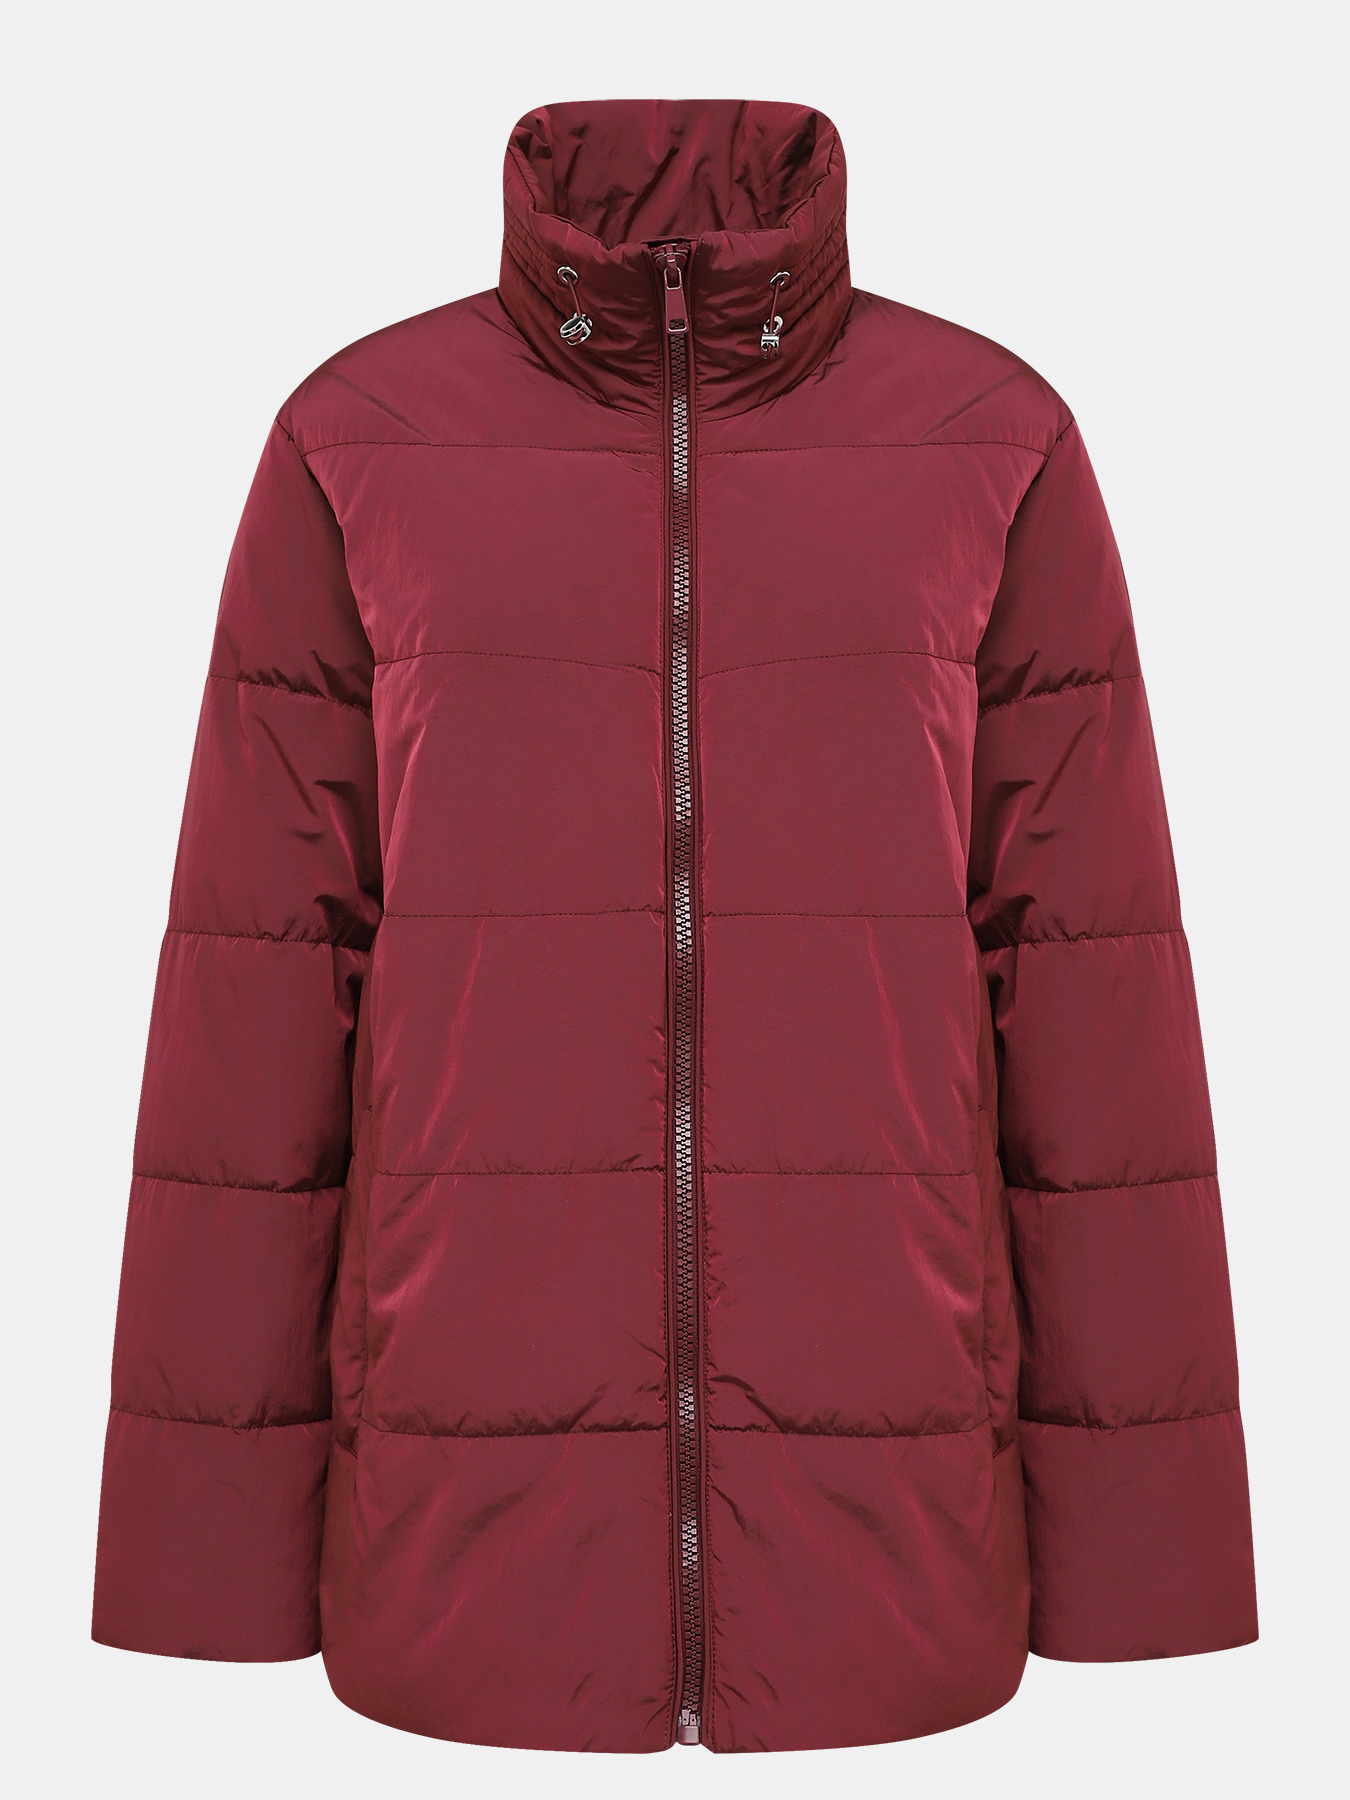 Куртка Samoon 419843-025, цвет бордовый, размер 54